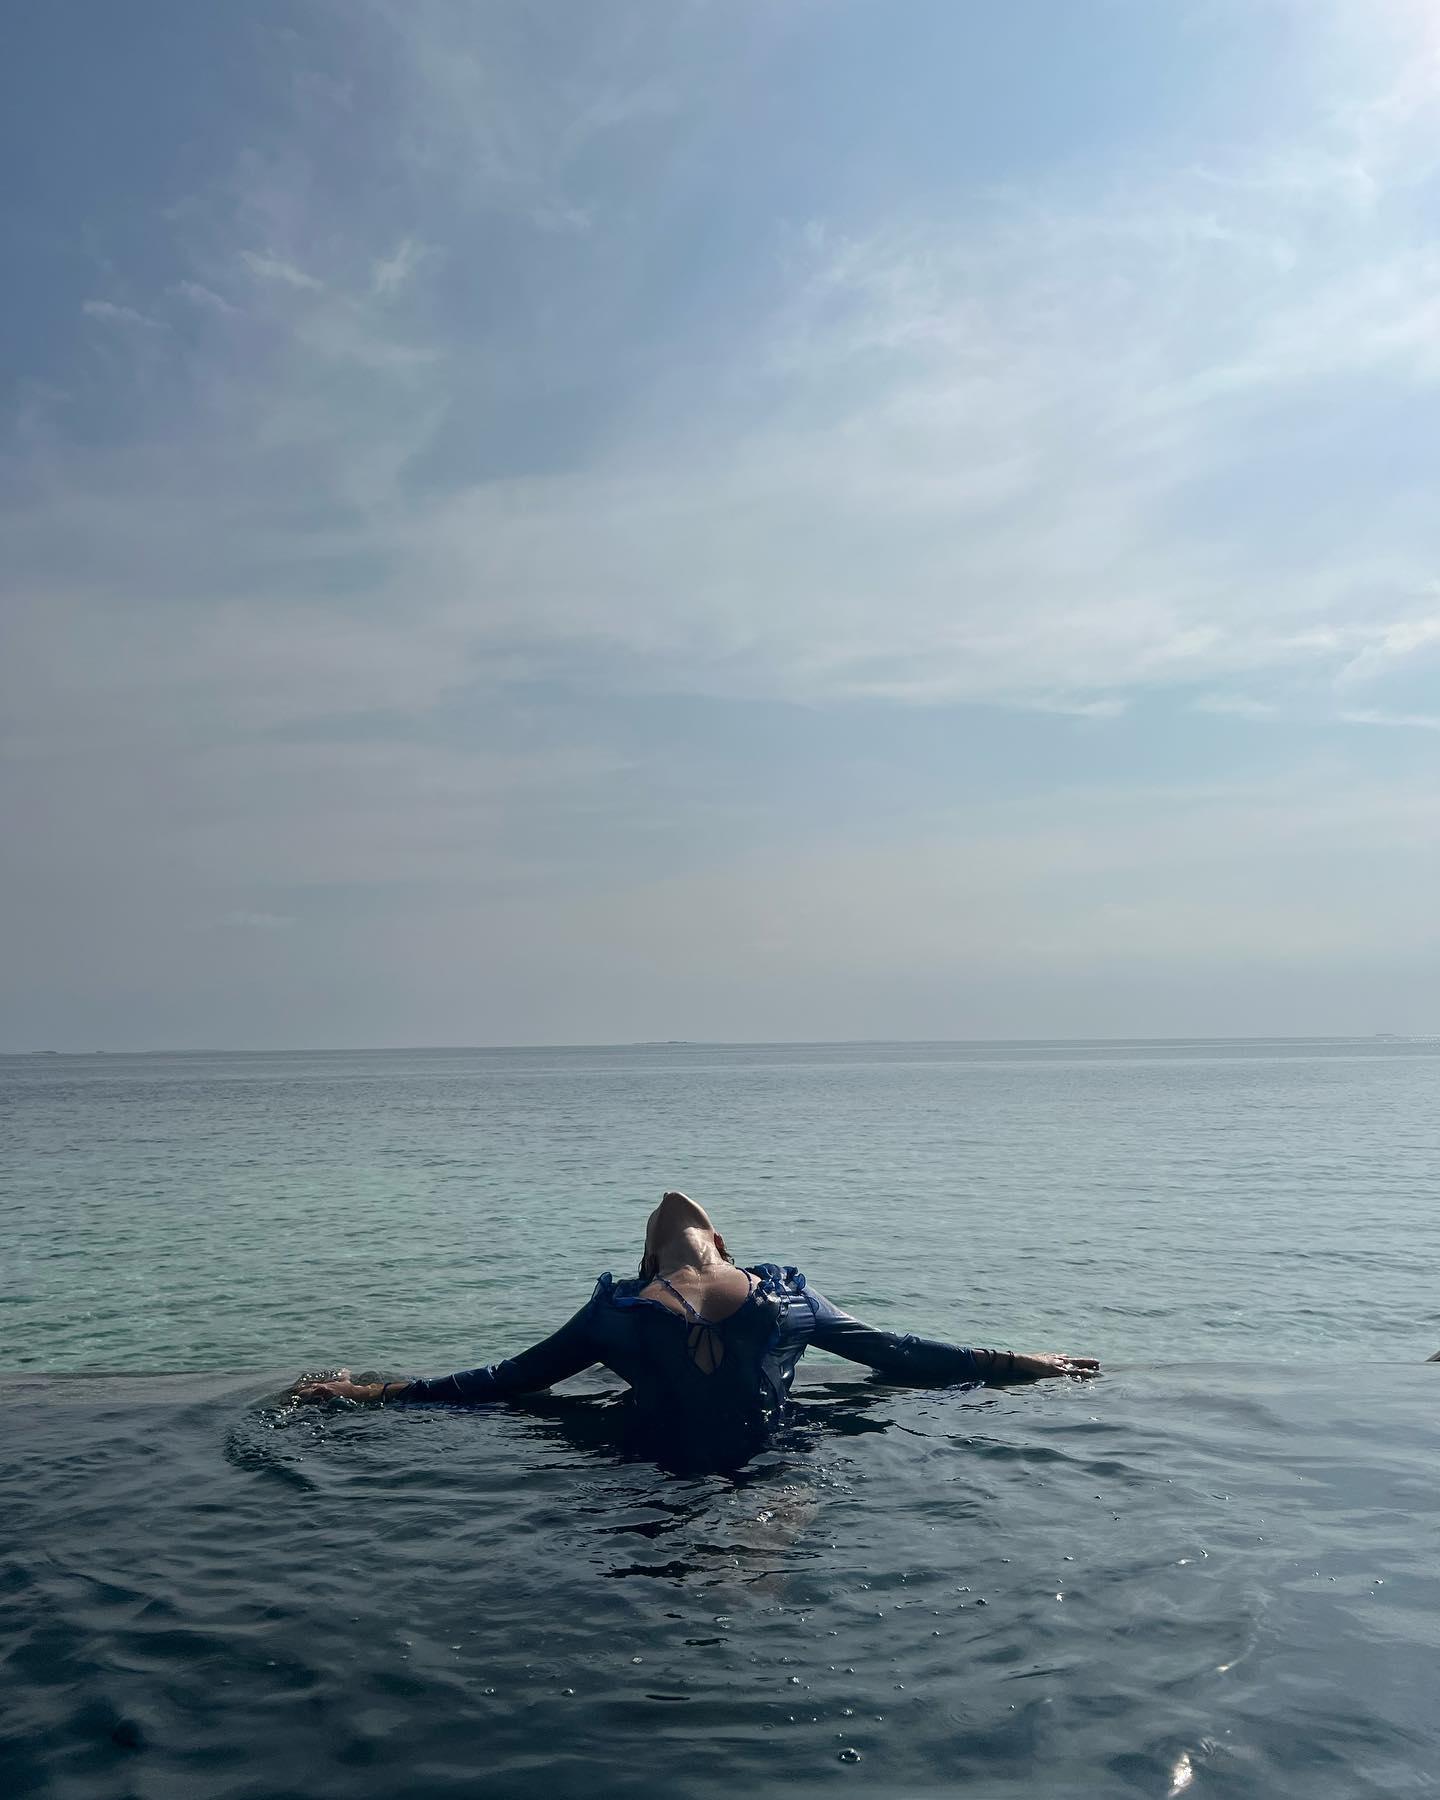 Nicole Poturalski poses in the water